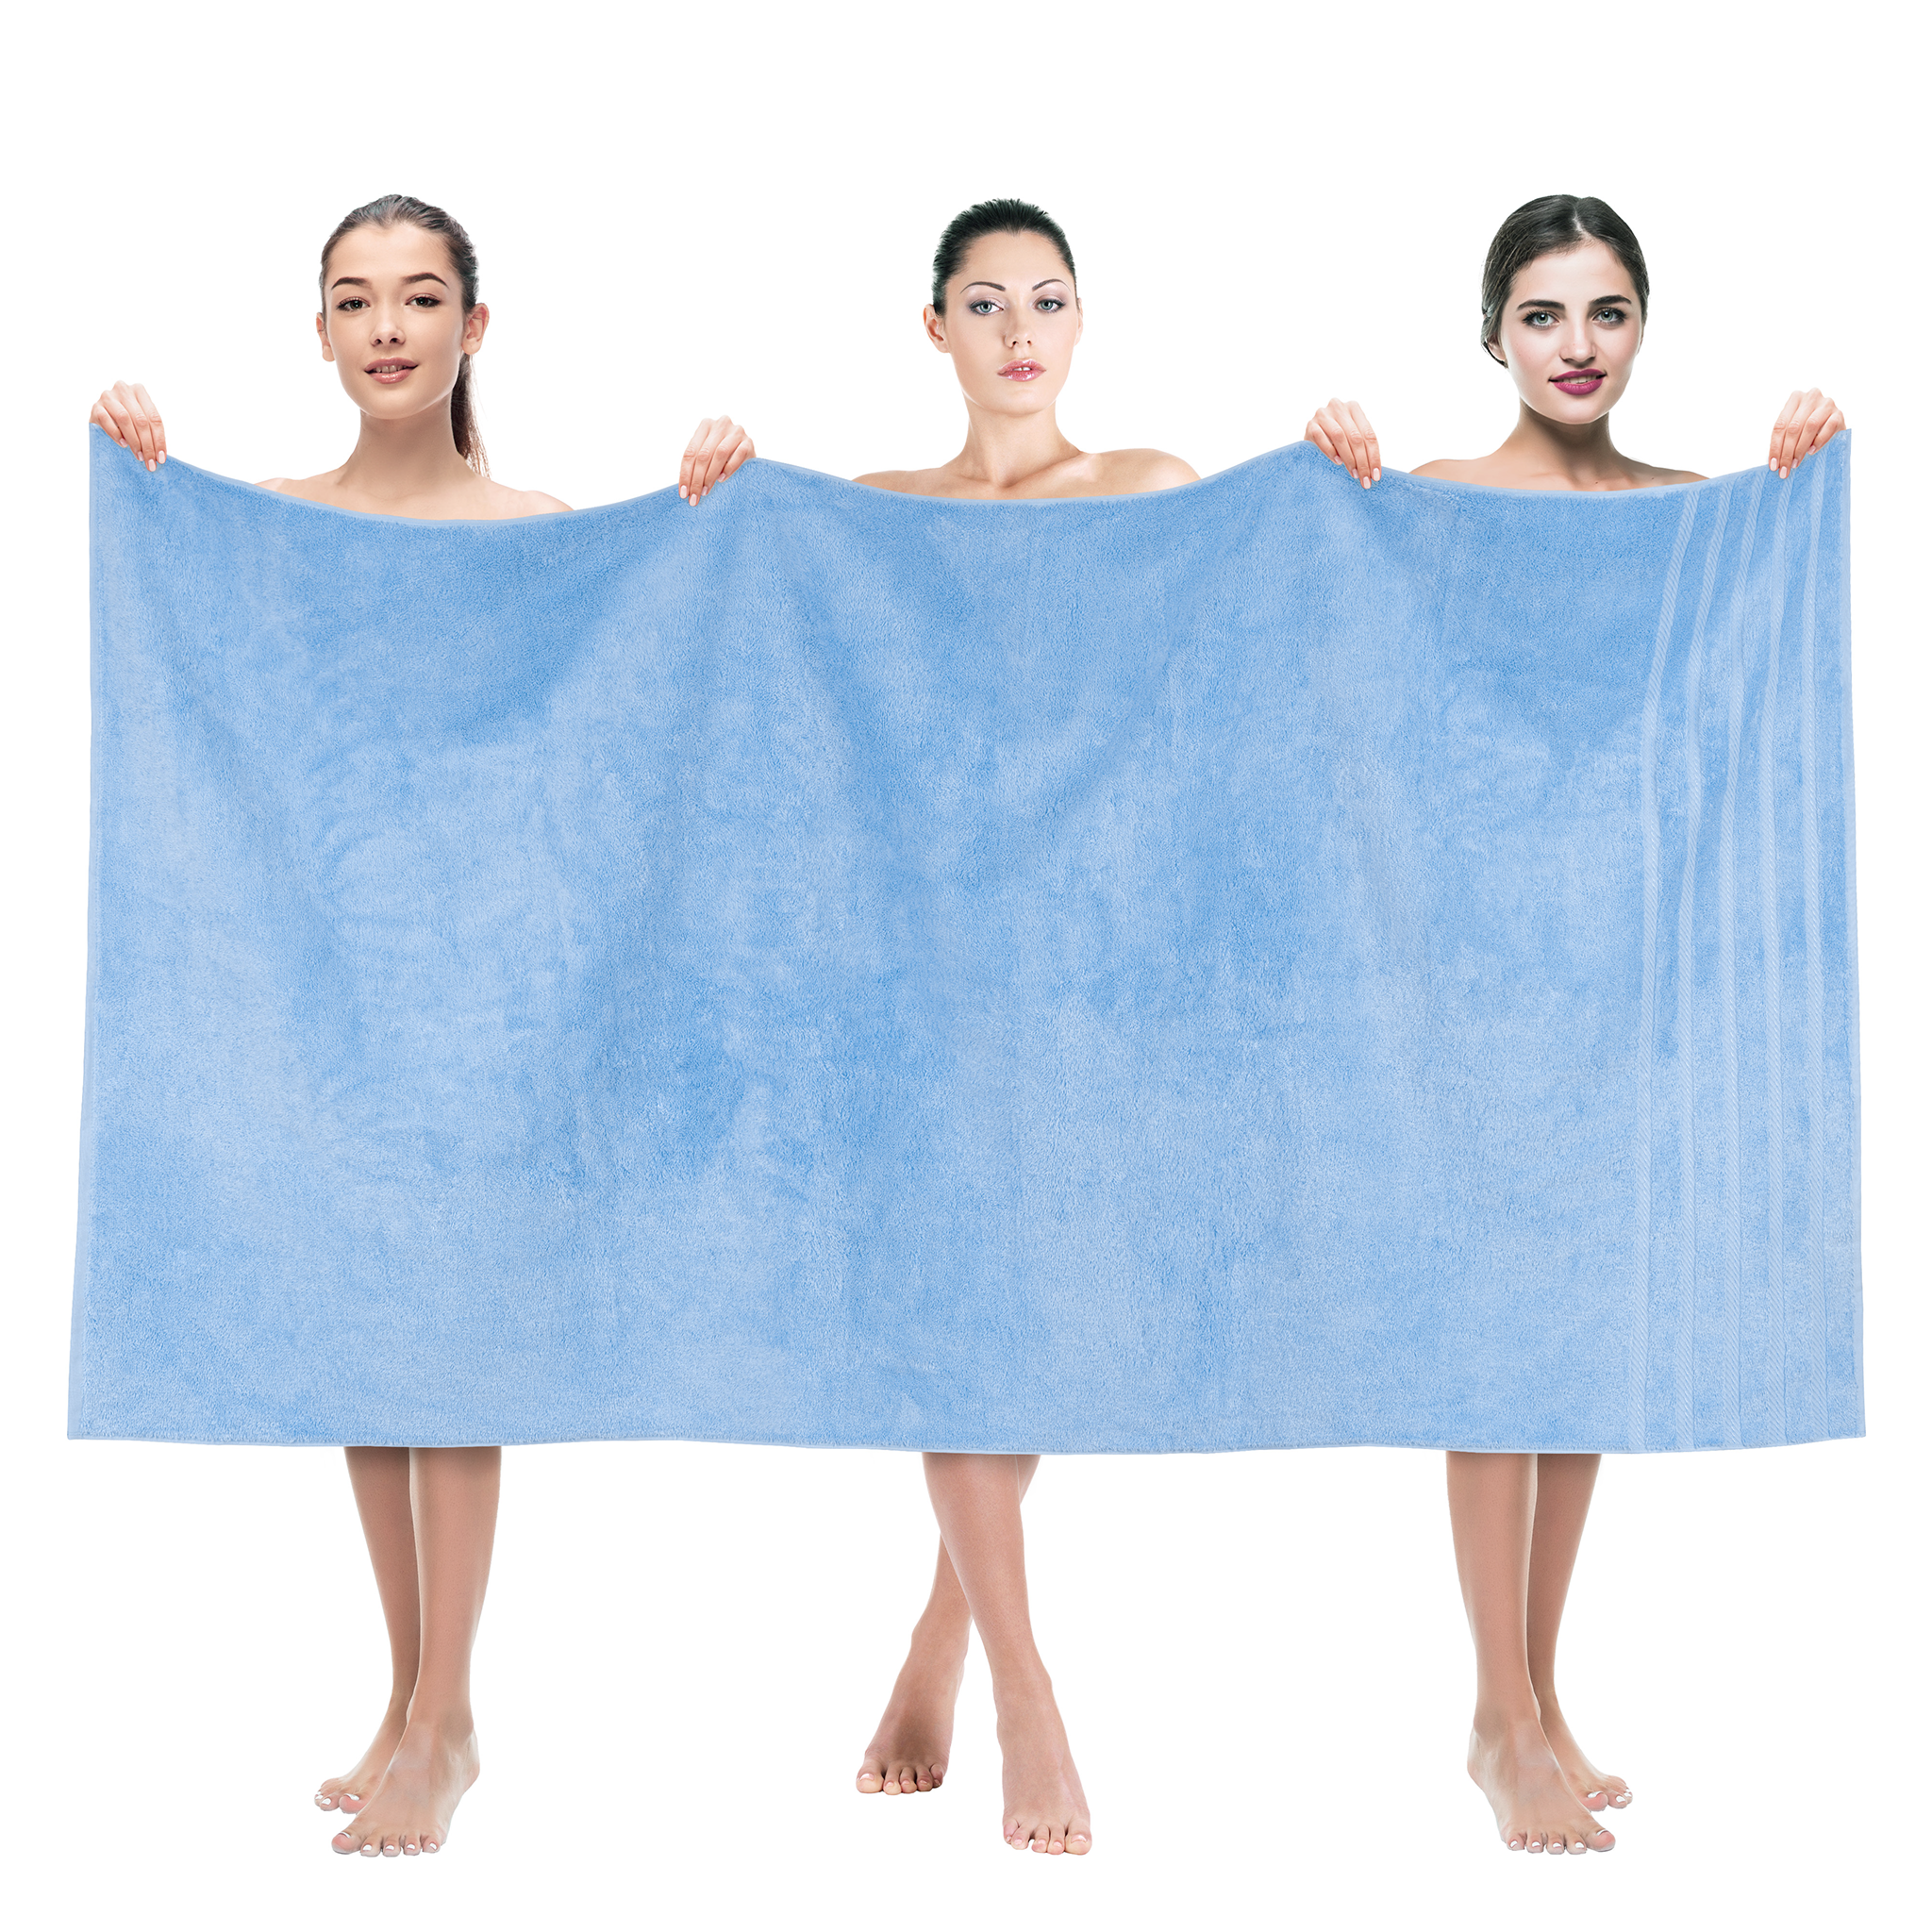 American Soft Linen - 35x70 Jumbo Bath Sheet Turkish Bath Towel - 16 Piece Case Pack - Sky-Blue - 1